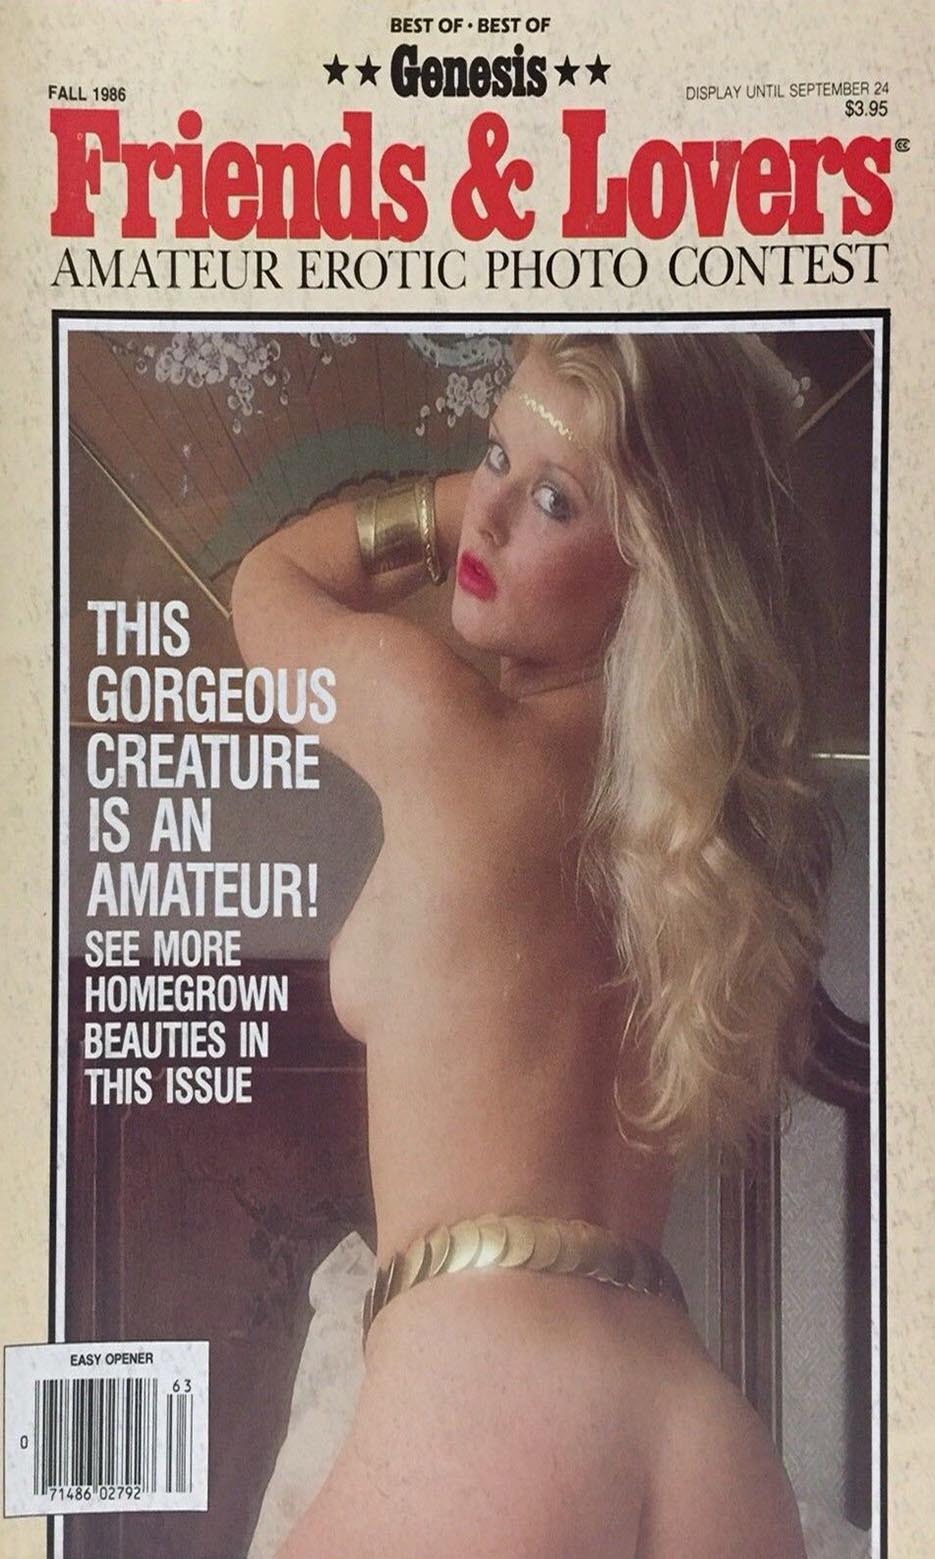 Best of Genesis Fall 1986 magazine back issue Best of Genesis magizine back copy 